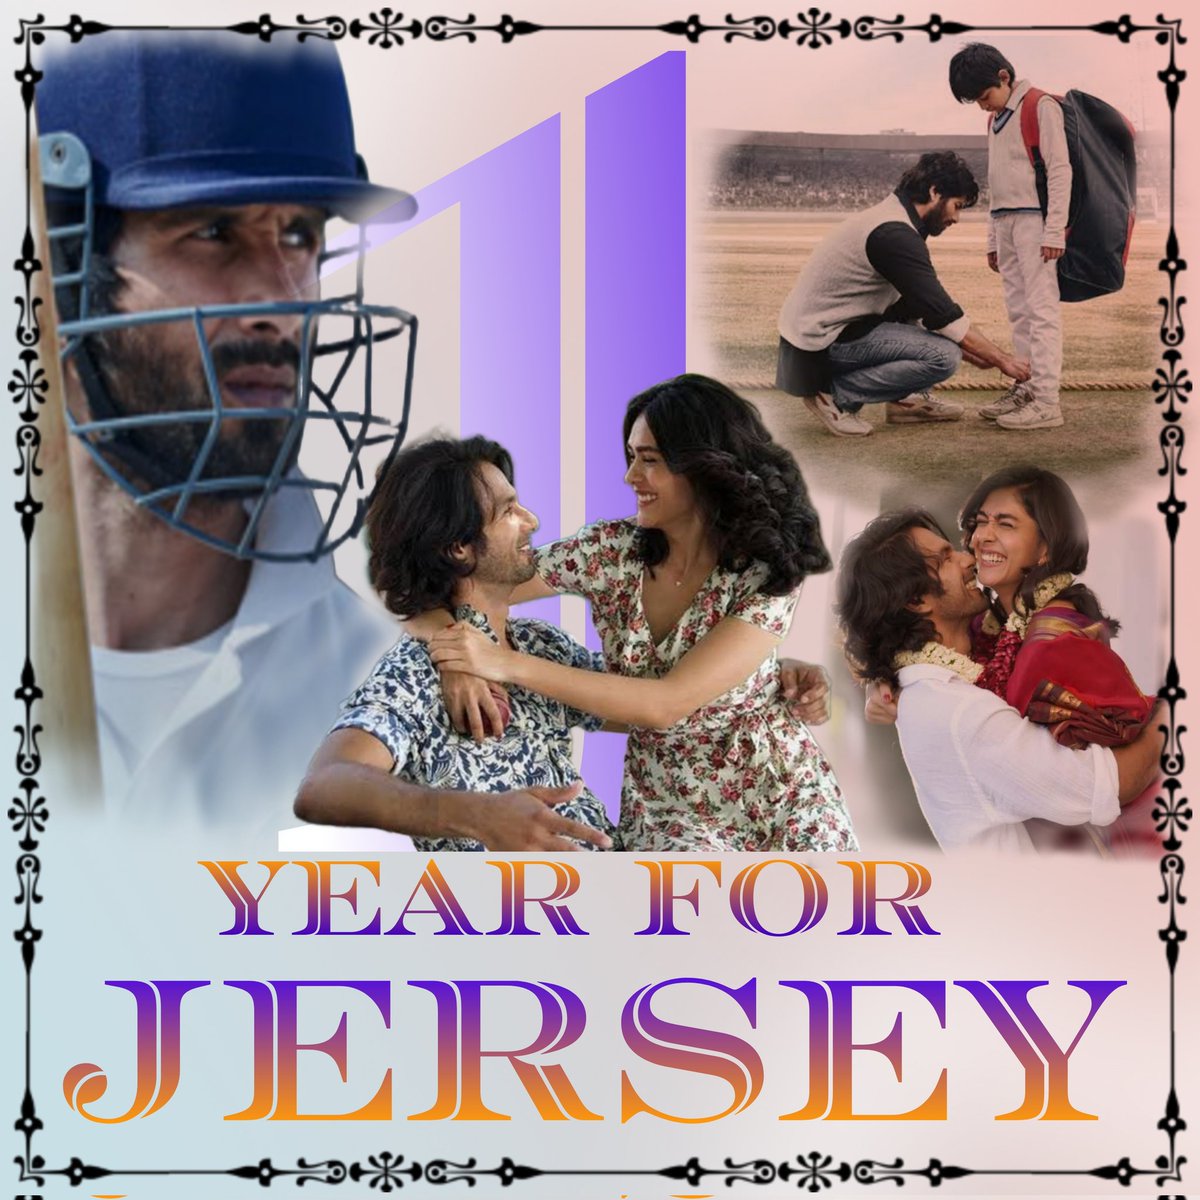 Congratulations #TeamJersey 
@mrunal0801
@shahidkapoor 
#1yearforJersey #Arjun #Vidya #Jersey #ArjunVidya #MrunalThakur #ShahidKapoor